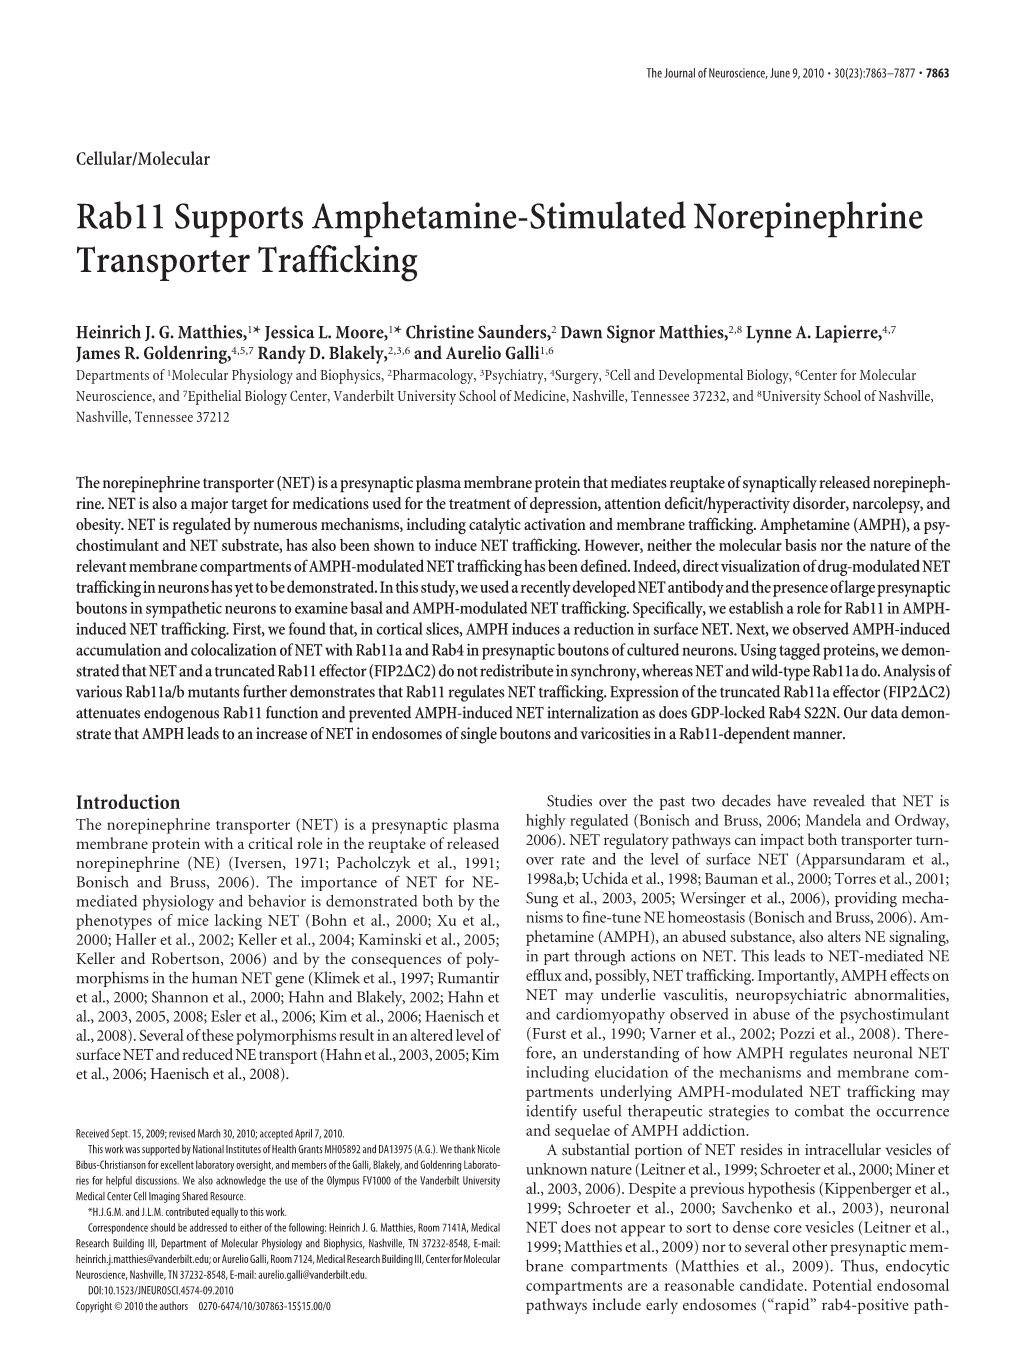 Rab11 Supports Amphetamine-Stimulated Norepinephrine Transporter Trafficking